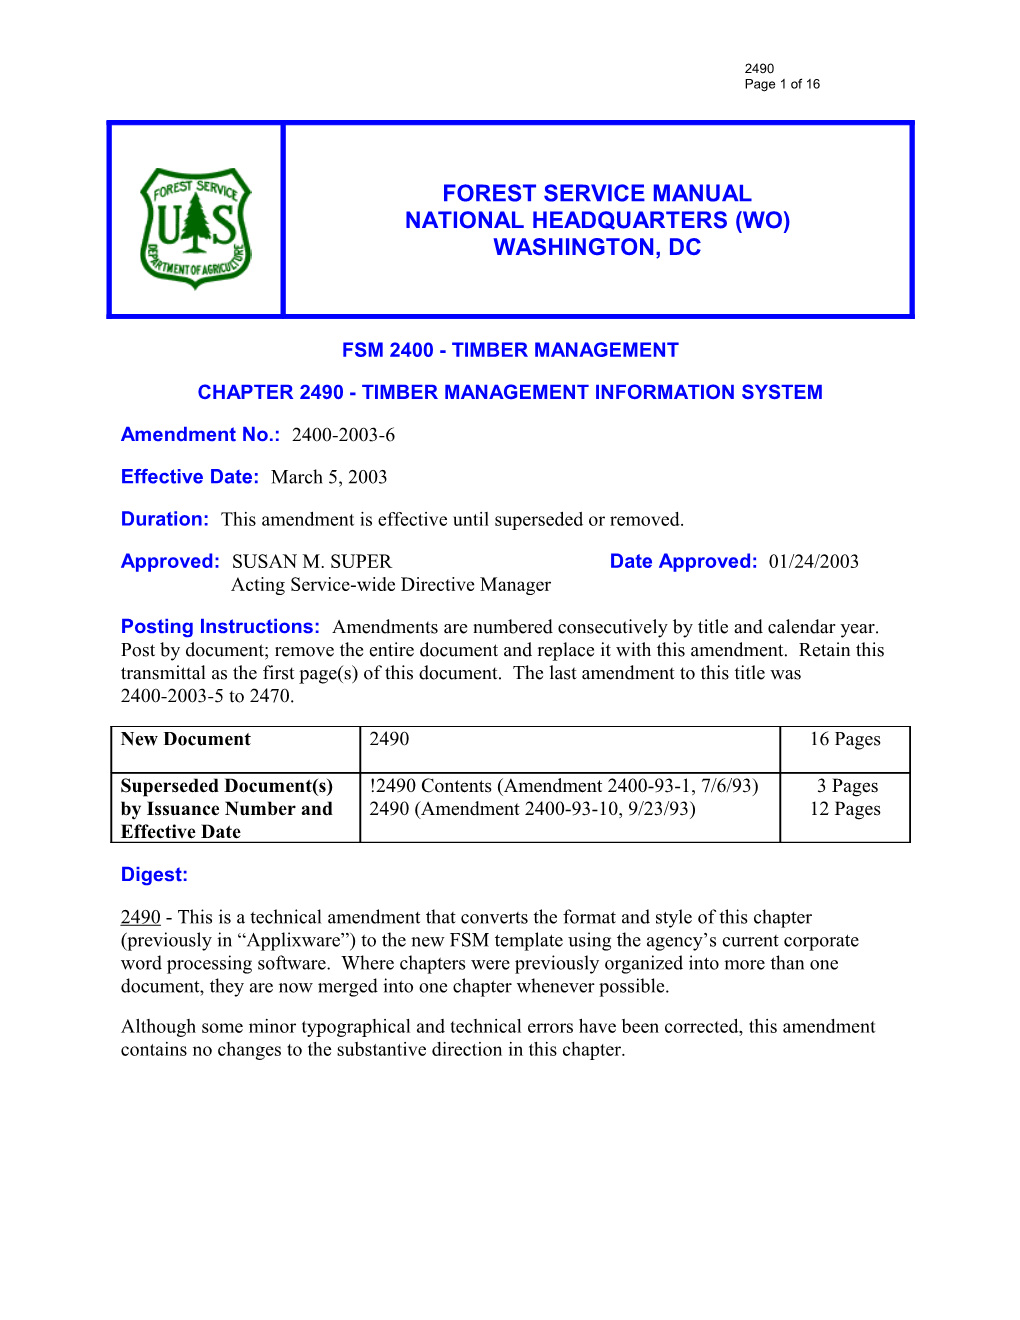 CHAPTER 2490 - Timber Management INFORMATION SYSTEM